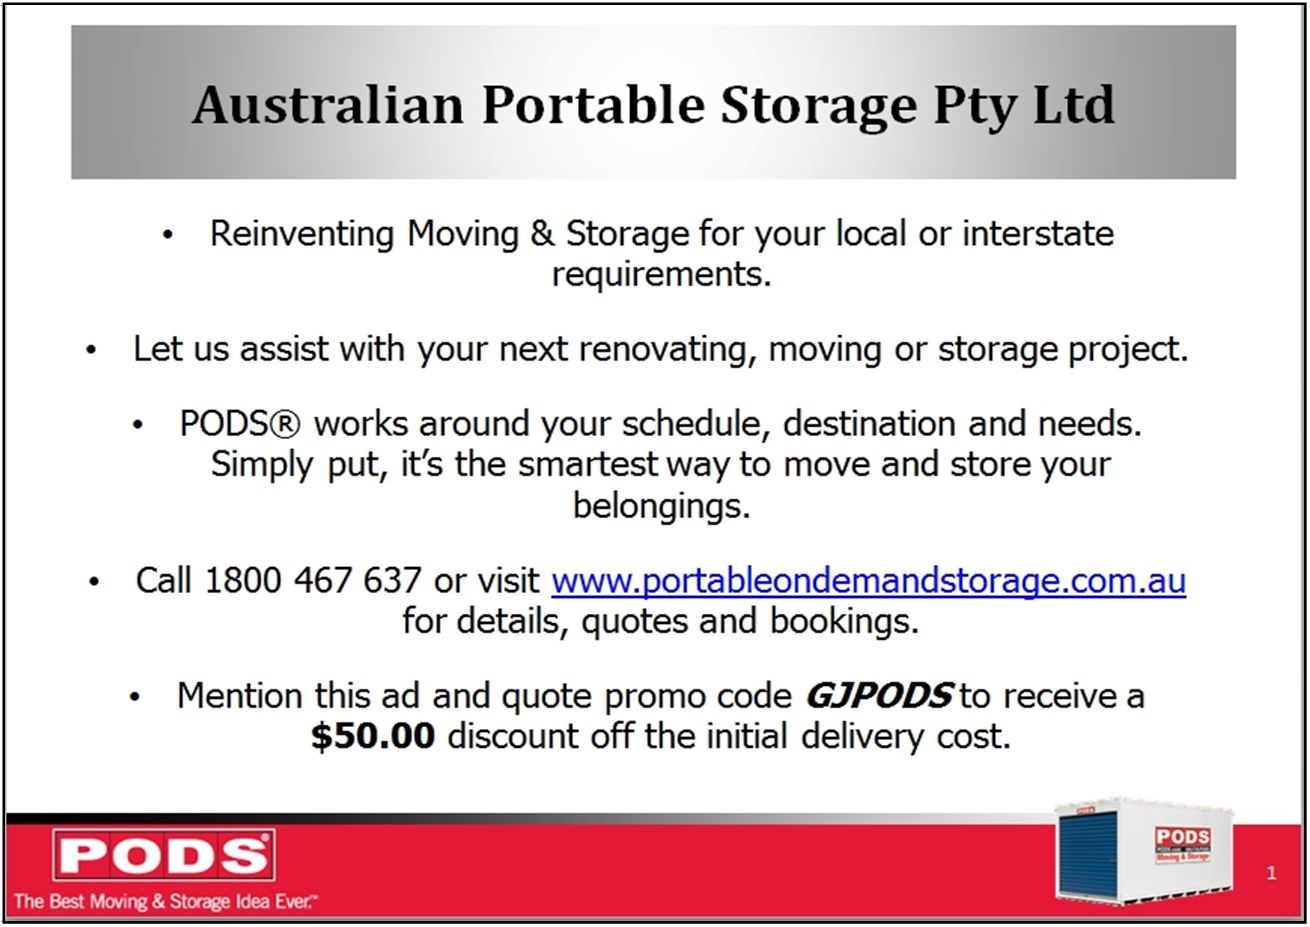 Aust Portable Storage (pods)